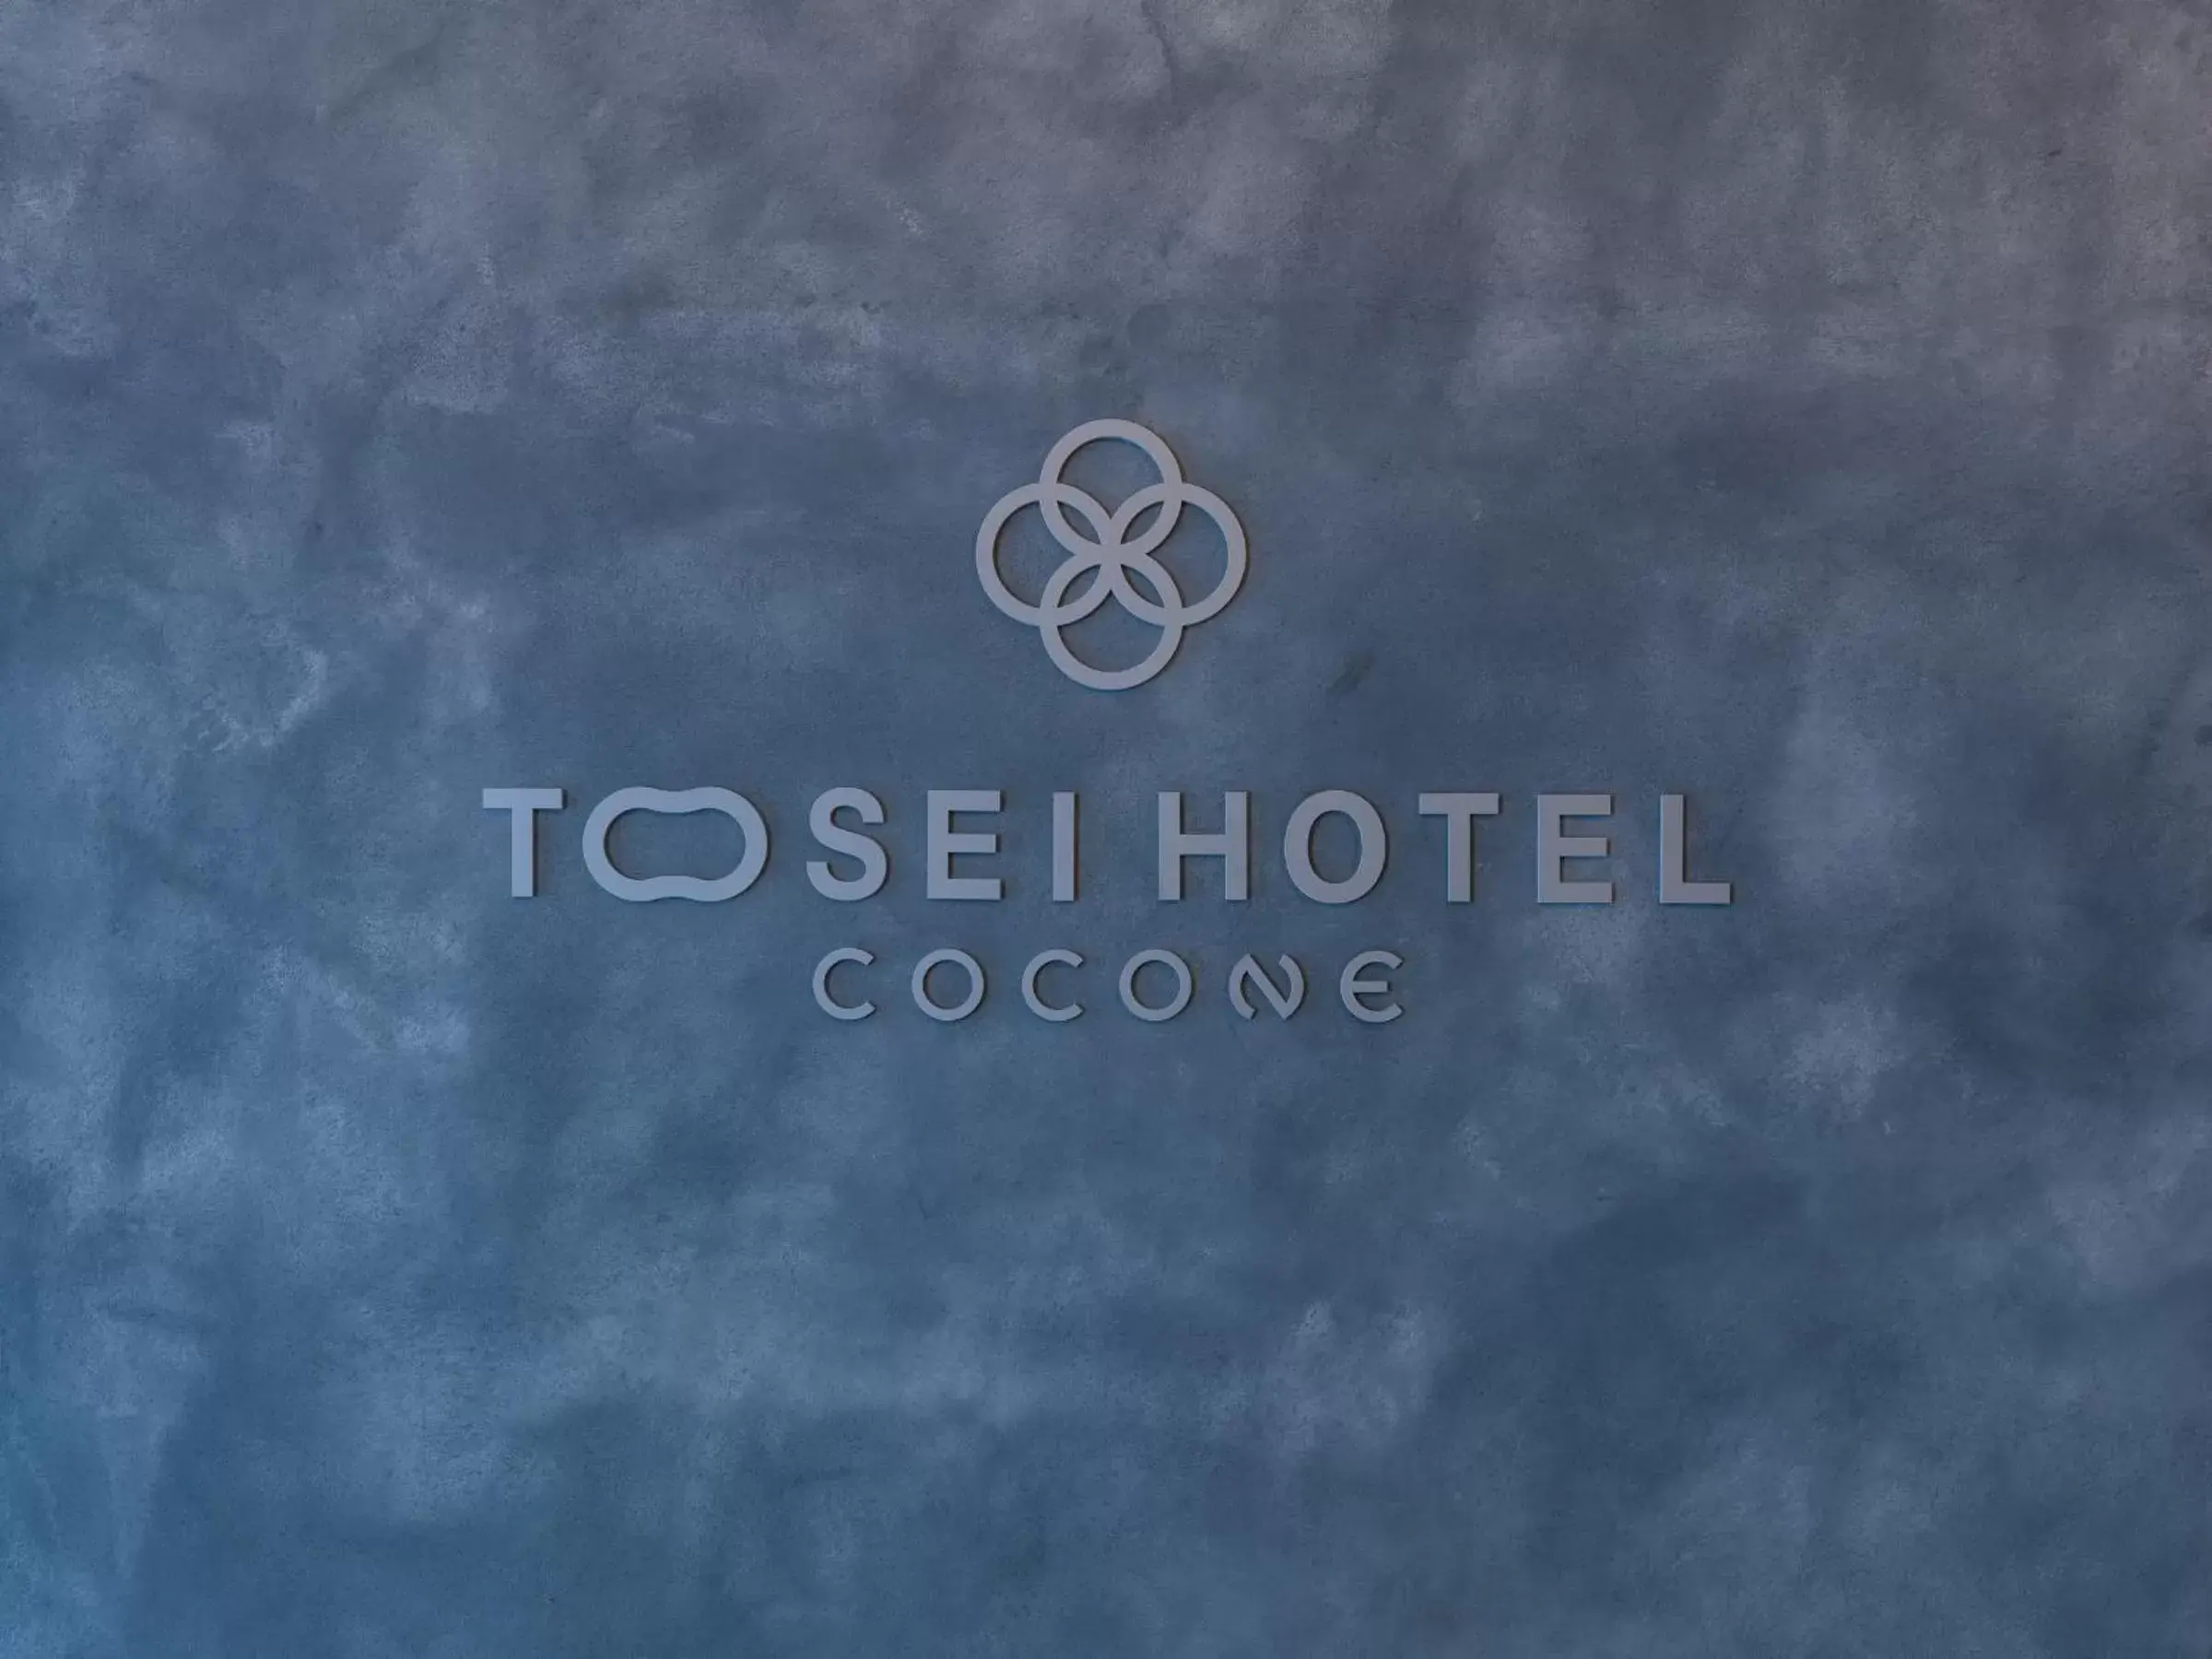 Property logo or sign in Tosei Hotel Cocone Asakusa Kuramae